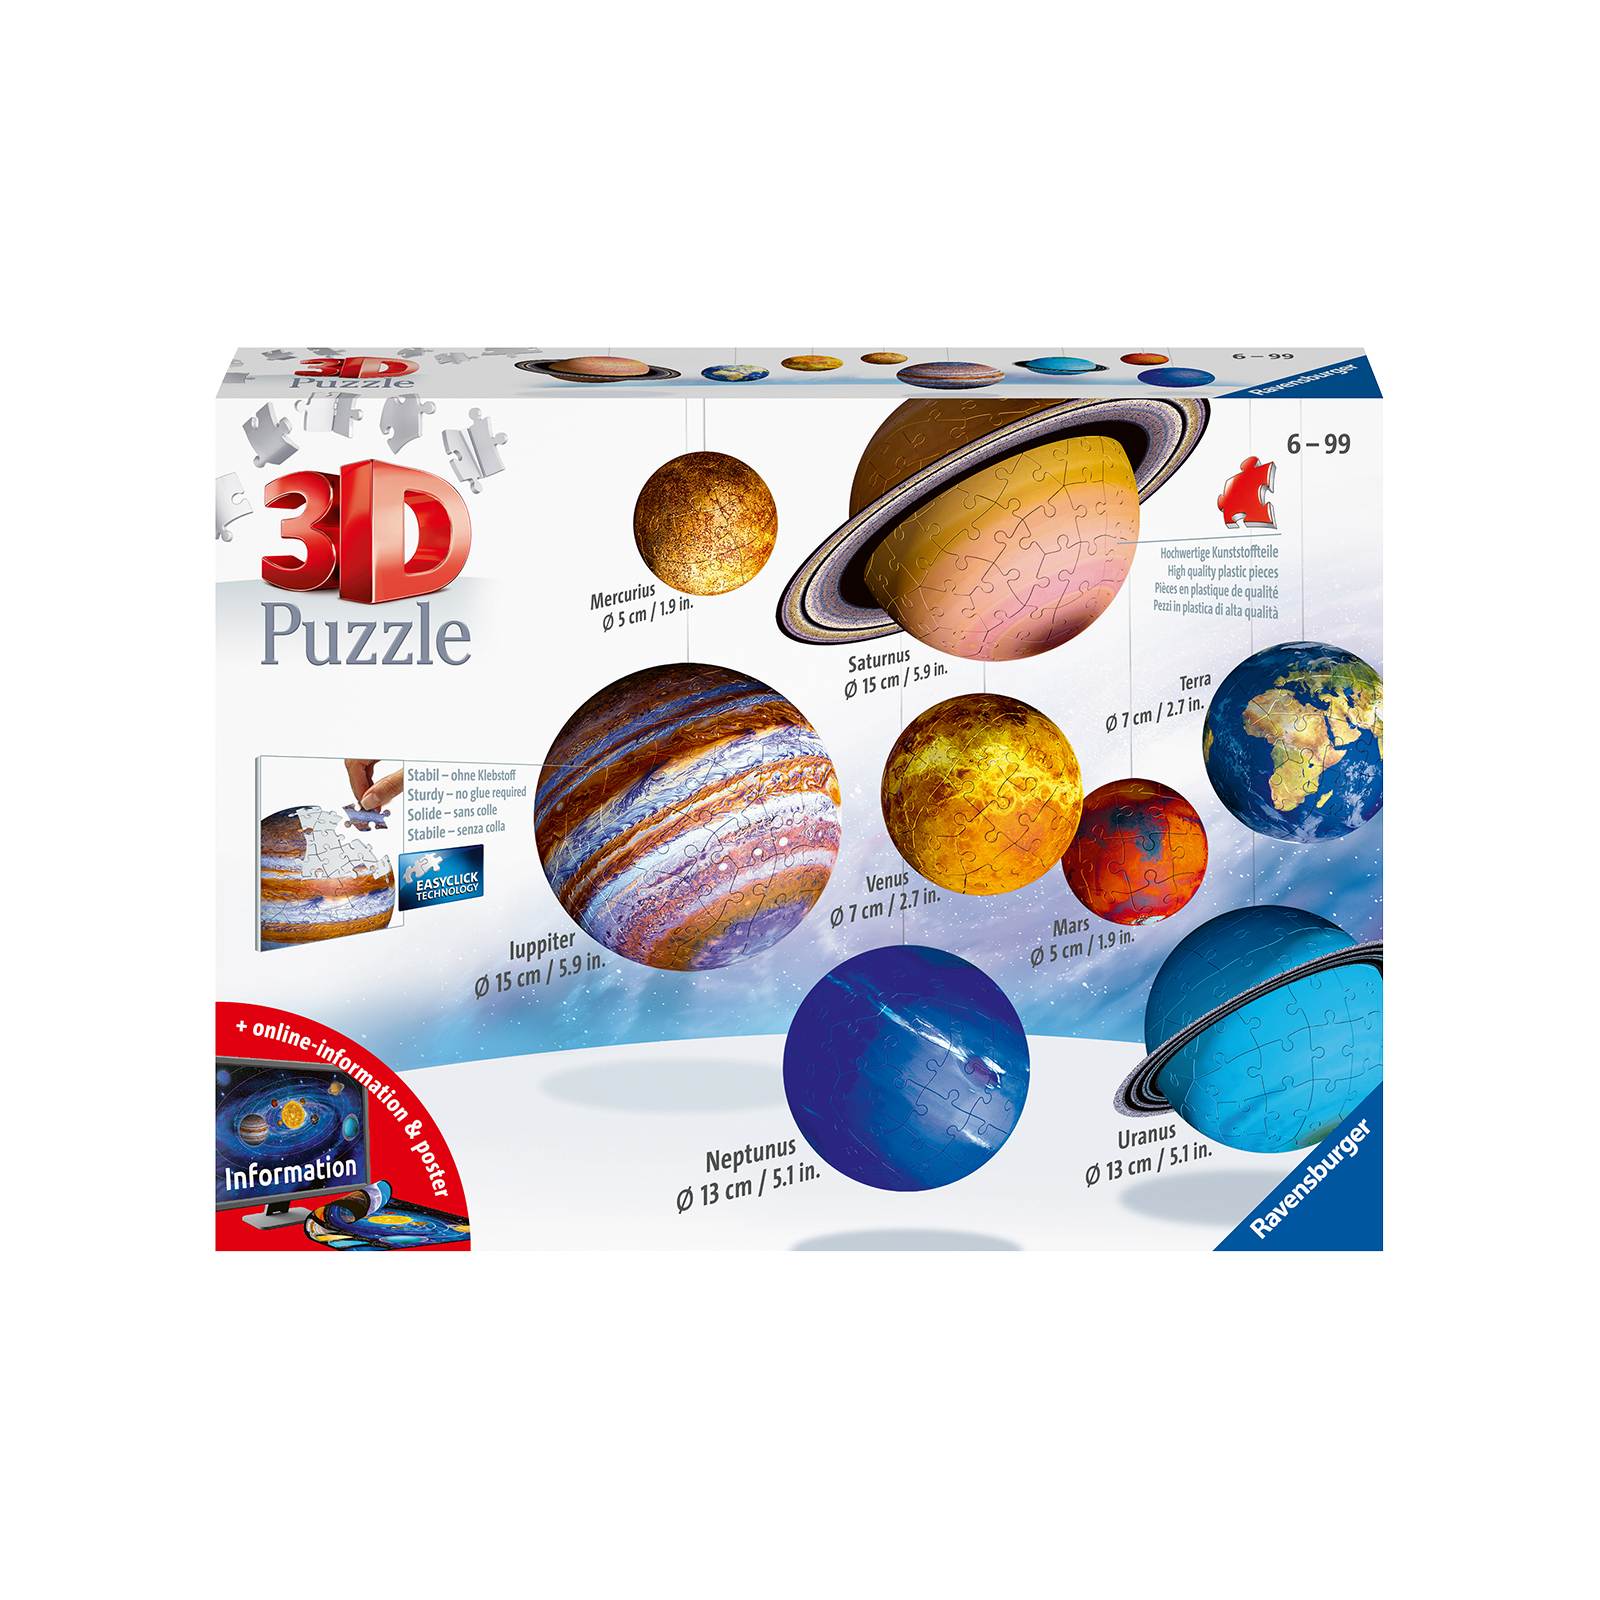 Ravensburger - 3d puzzle il sistema planetario, 540 pezzi, 6+ anni - RAVENSBURGER, RAVENSBURGER 3D PUZZLE